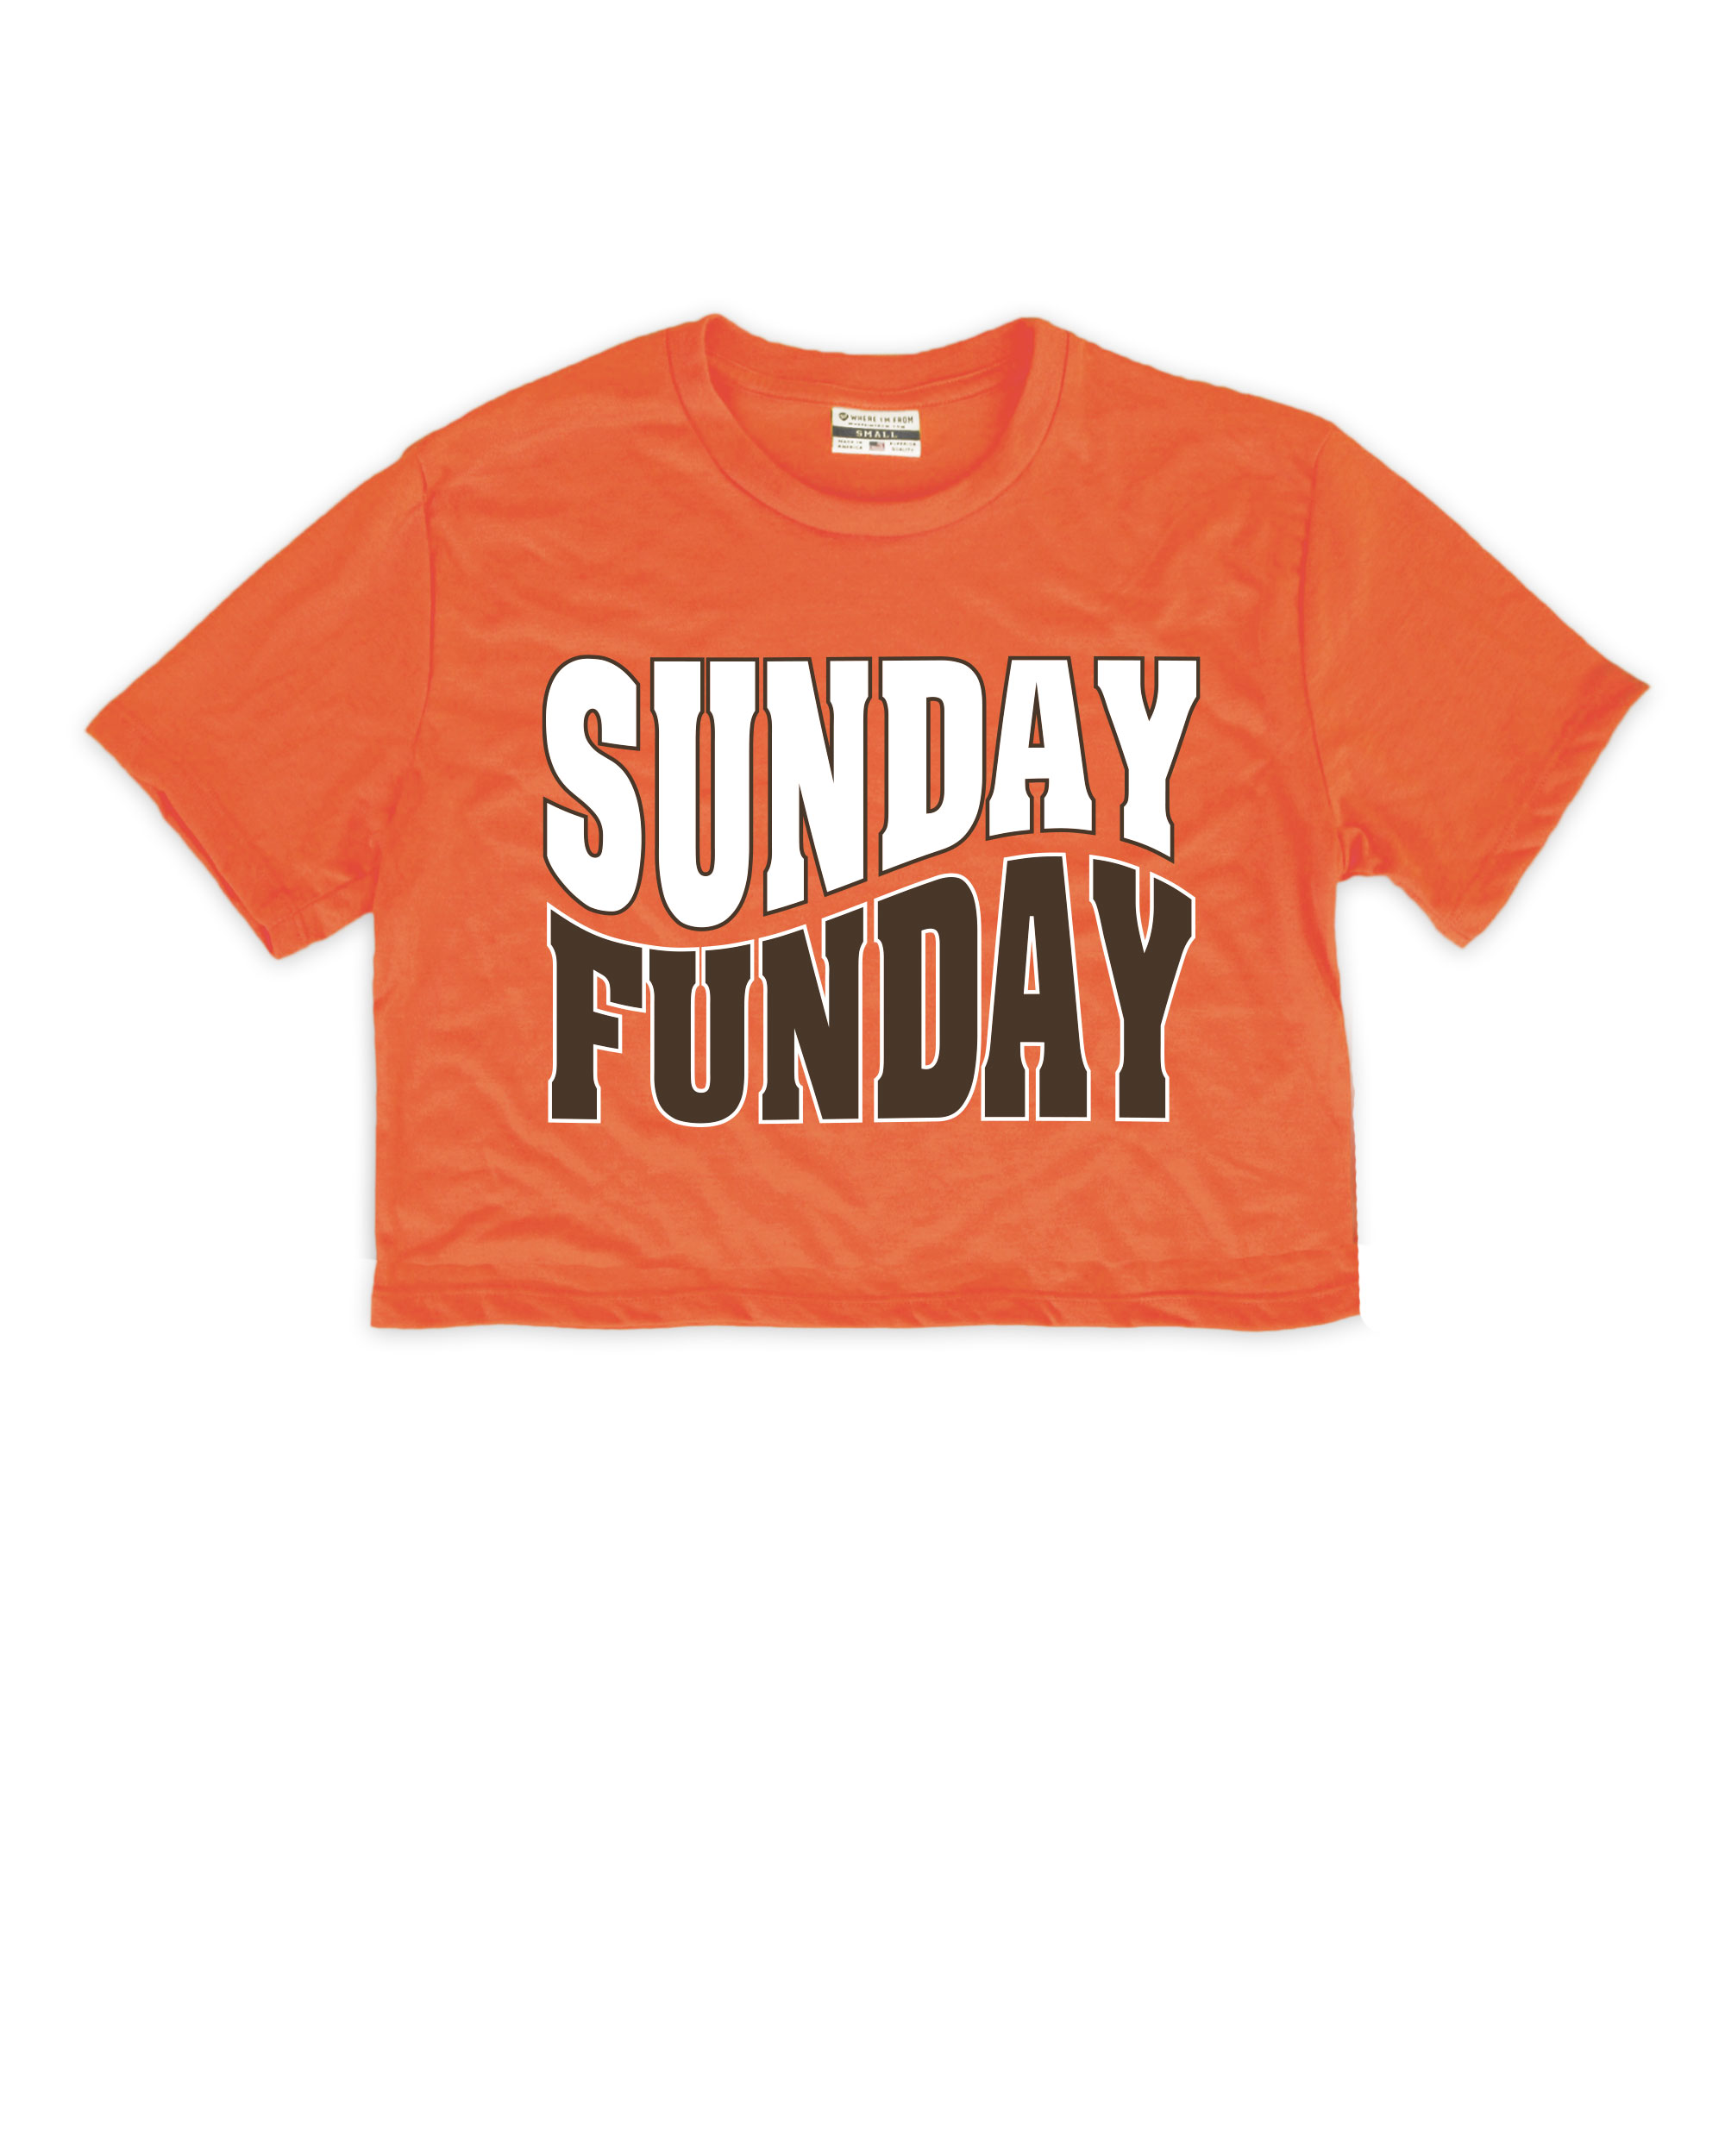 Cle Sunday Funday Orange Crop Top